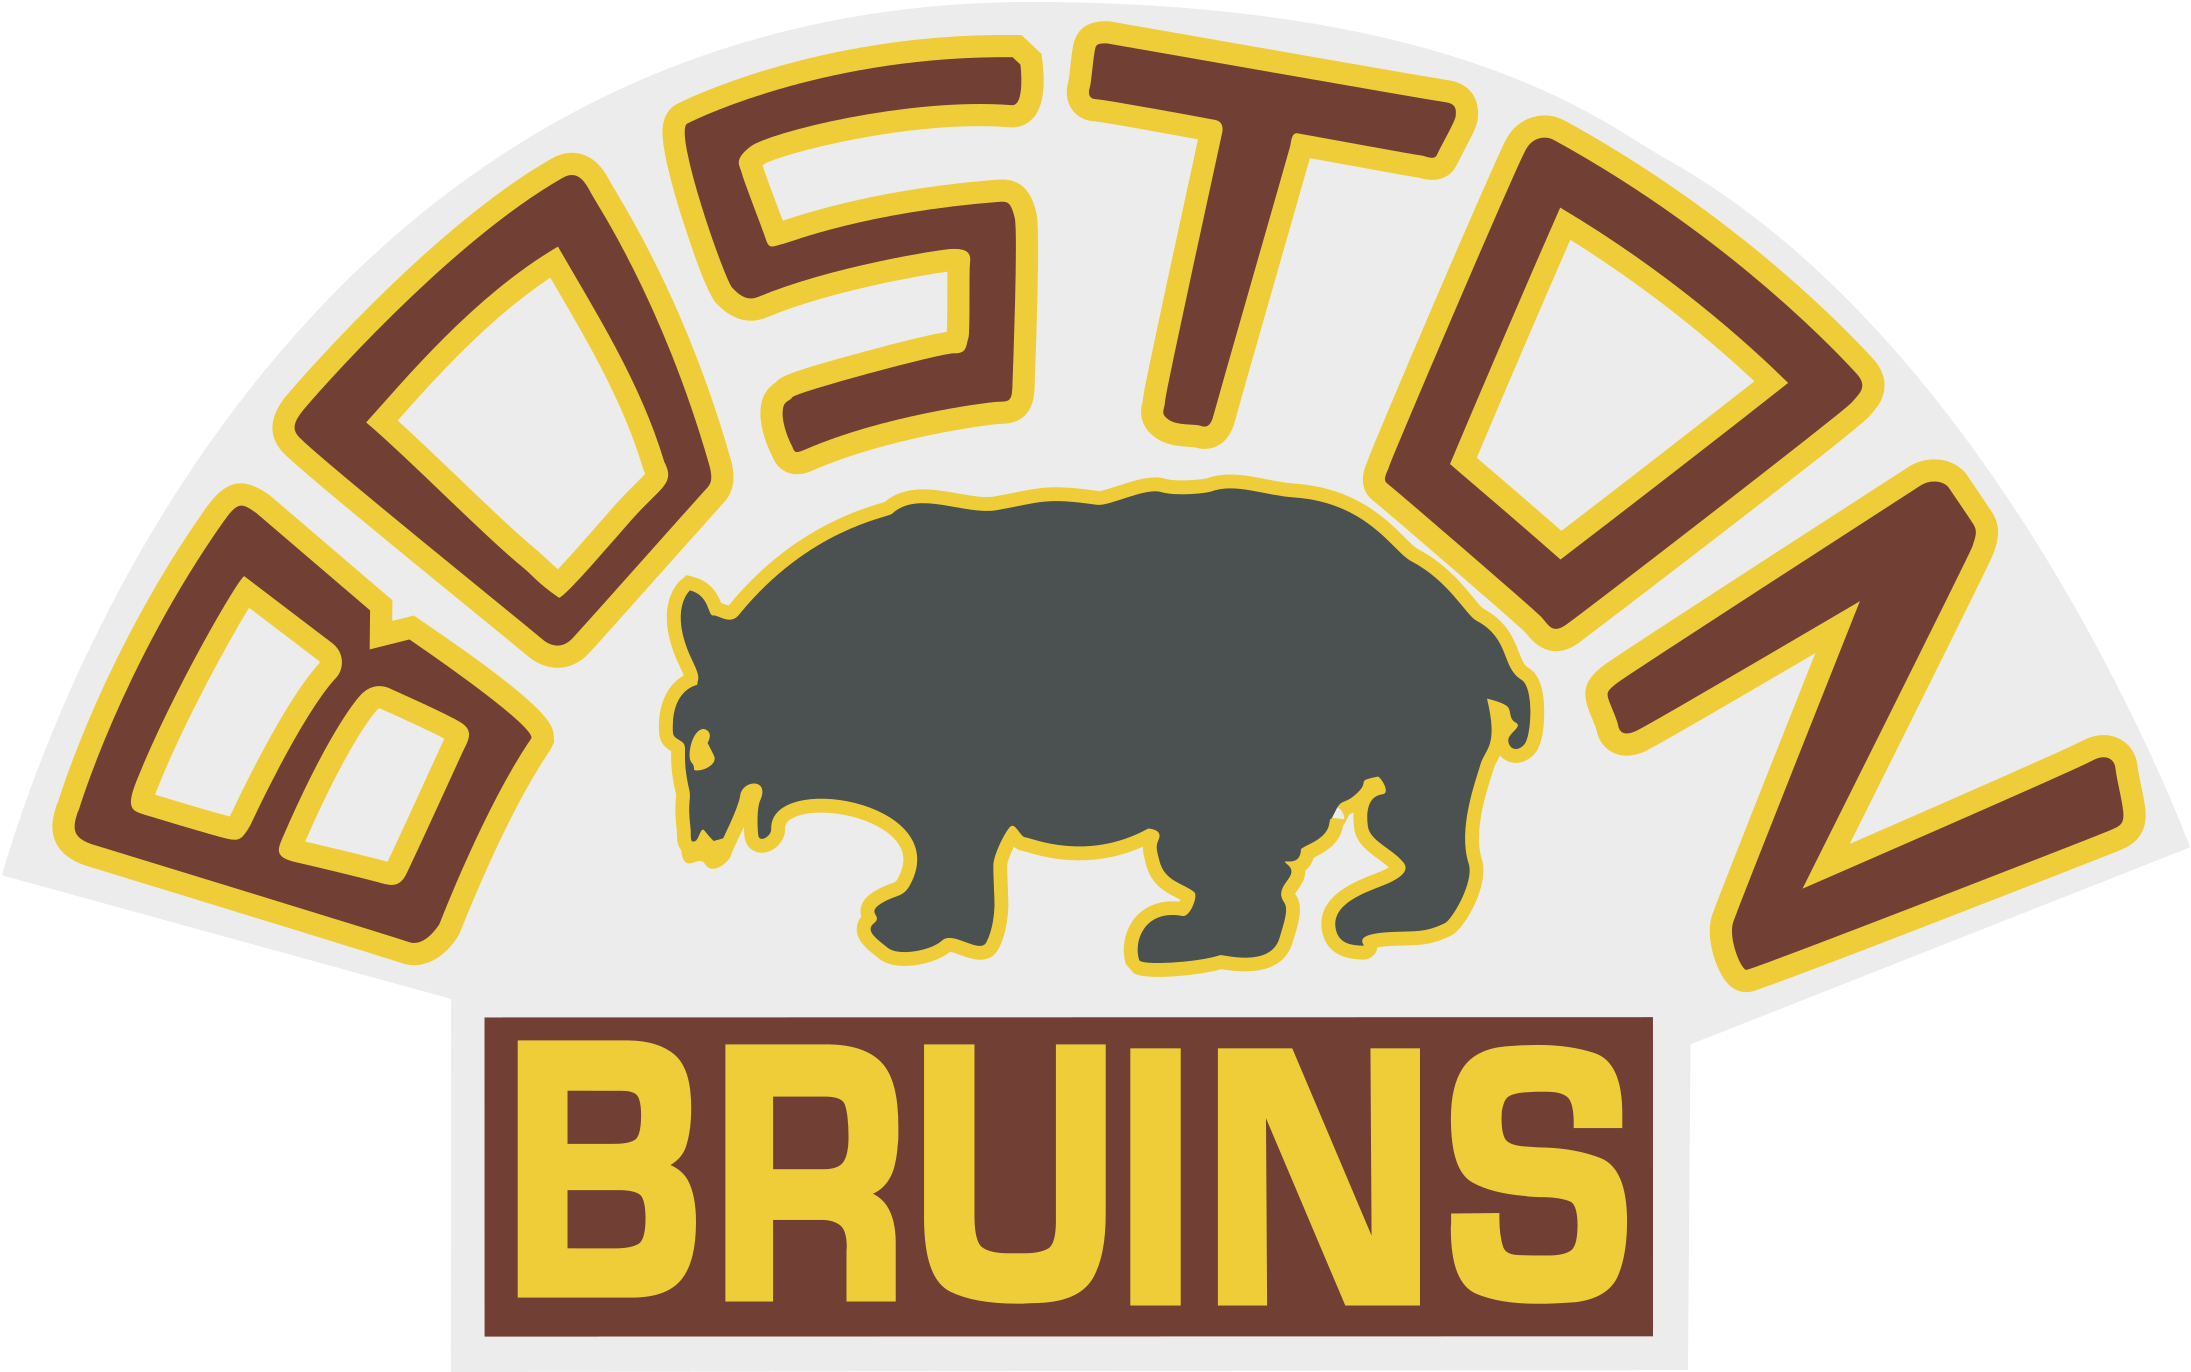 Boston Bruins Logo Png Transparent - Boston Bruins Old Logo (2400x2400), Png Download